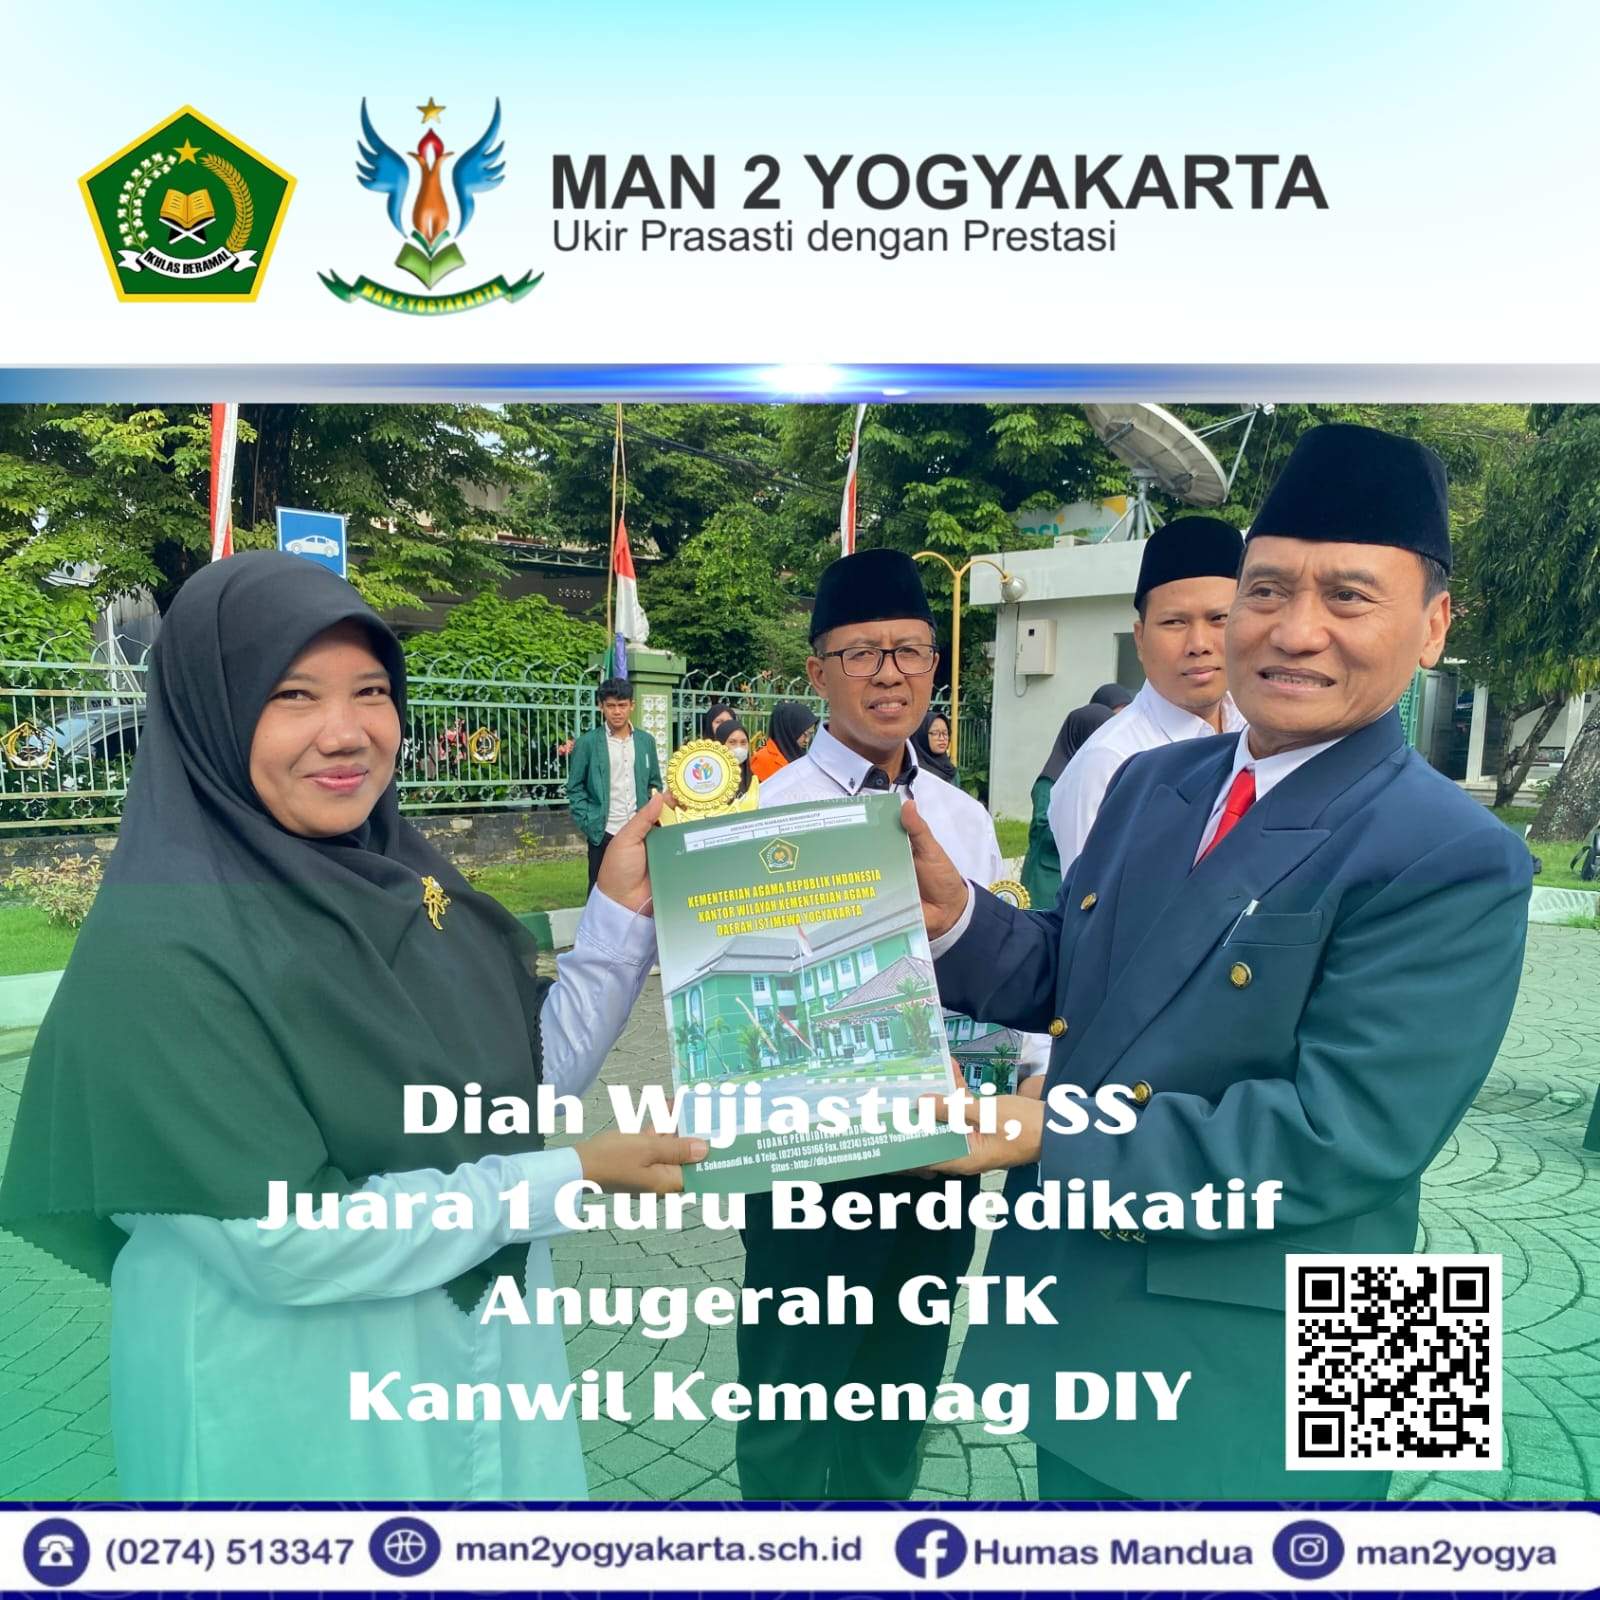 Diah Wijiastuti, S.S Guru Bahasa Jepang MAN 2 Yogyakarta Juara 1 Guru Berdedikatif Anugera GTK Kanwil Kemenag DIY, 2024